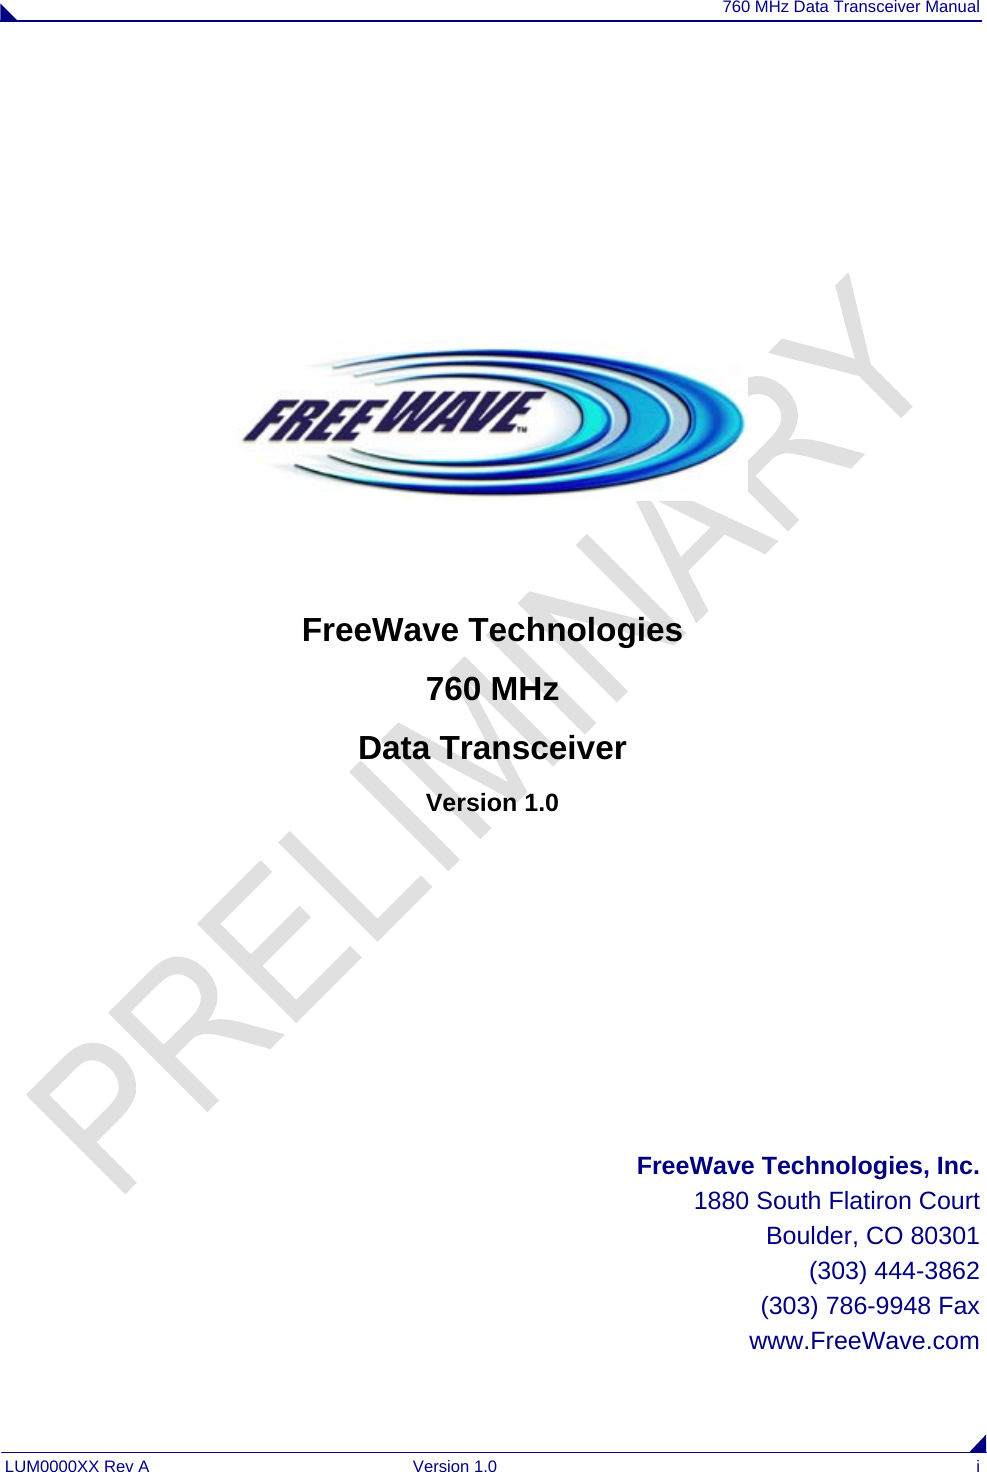 760 MHz Data Transceiver Manual LUM0000XX Rev A  Version 1.0  i          FreeWave Technologies 760 MHz  Data Transceiver Version 1.0        FreeWave Technologies, Inc. 1880 South Flatiron Court Boulder, CO 80301 (303) 444-3862 (303) 786-9948 Fax www.FreeWave.com 